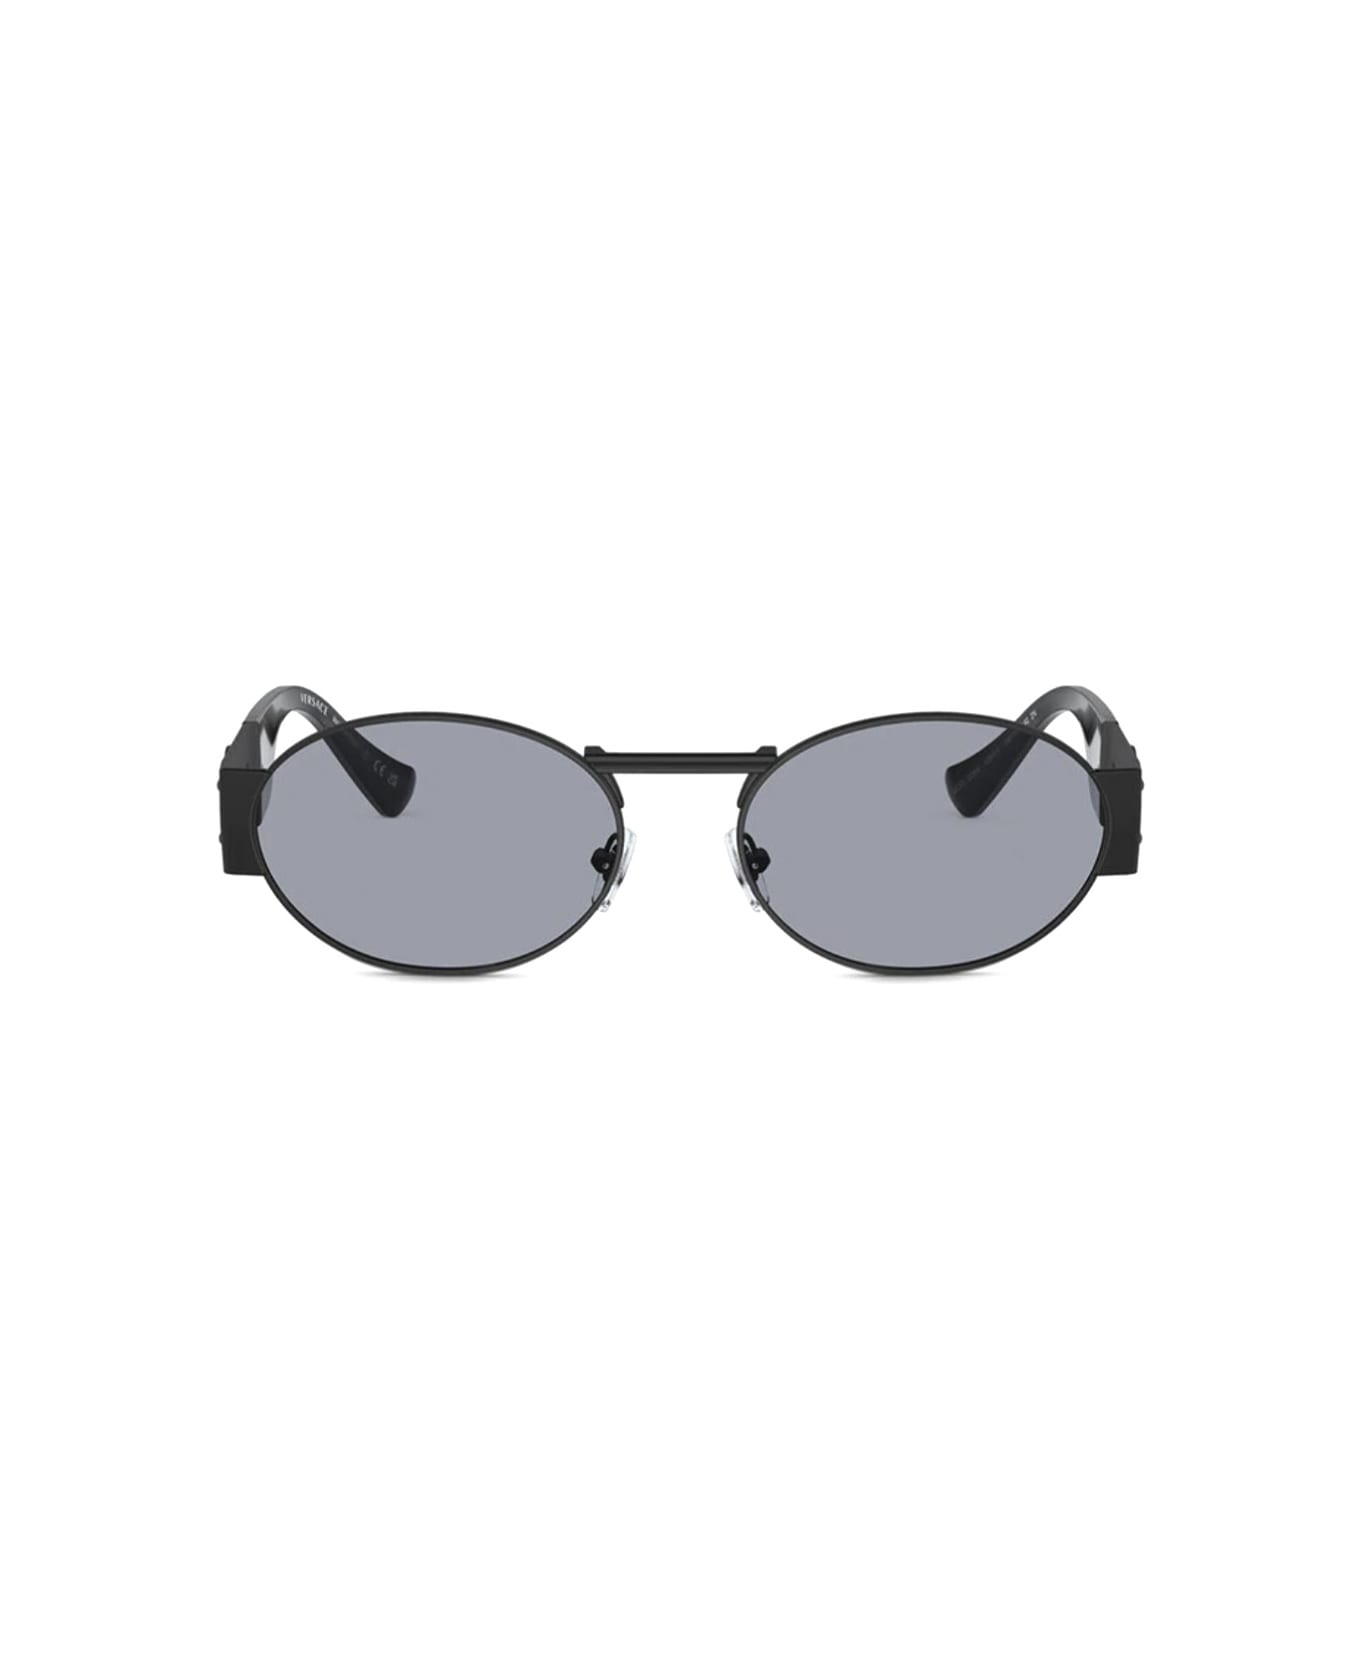 Versace Eyewear Ve2264 1261/1 Sunglasses - Nero